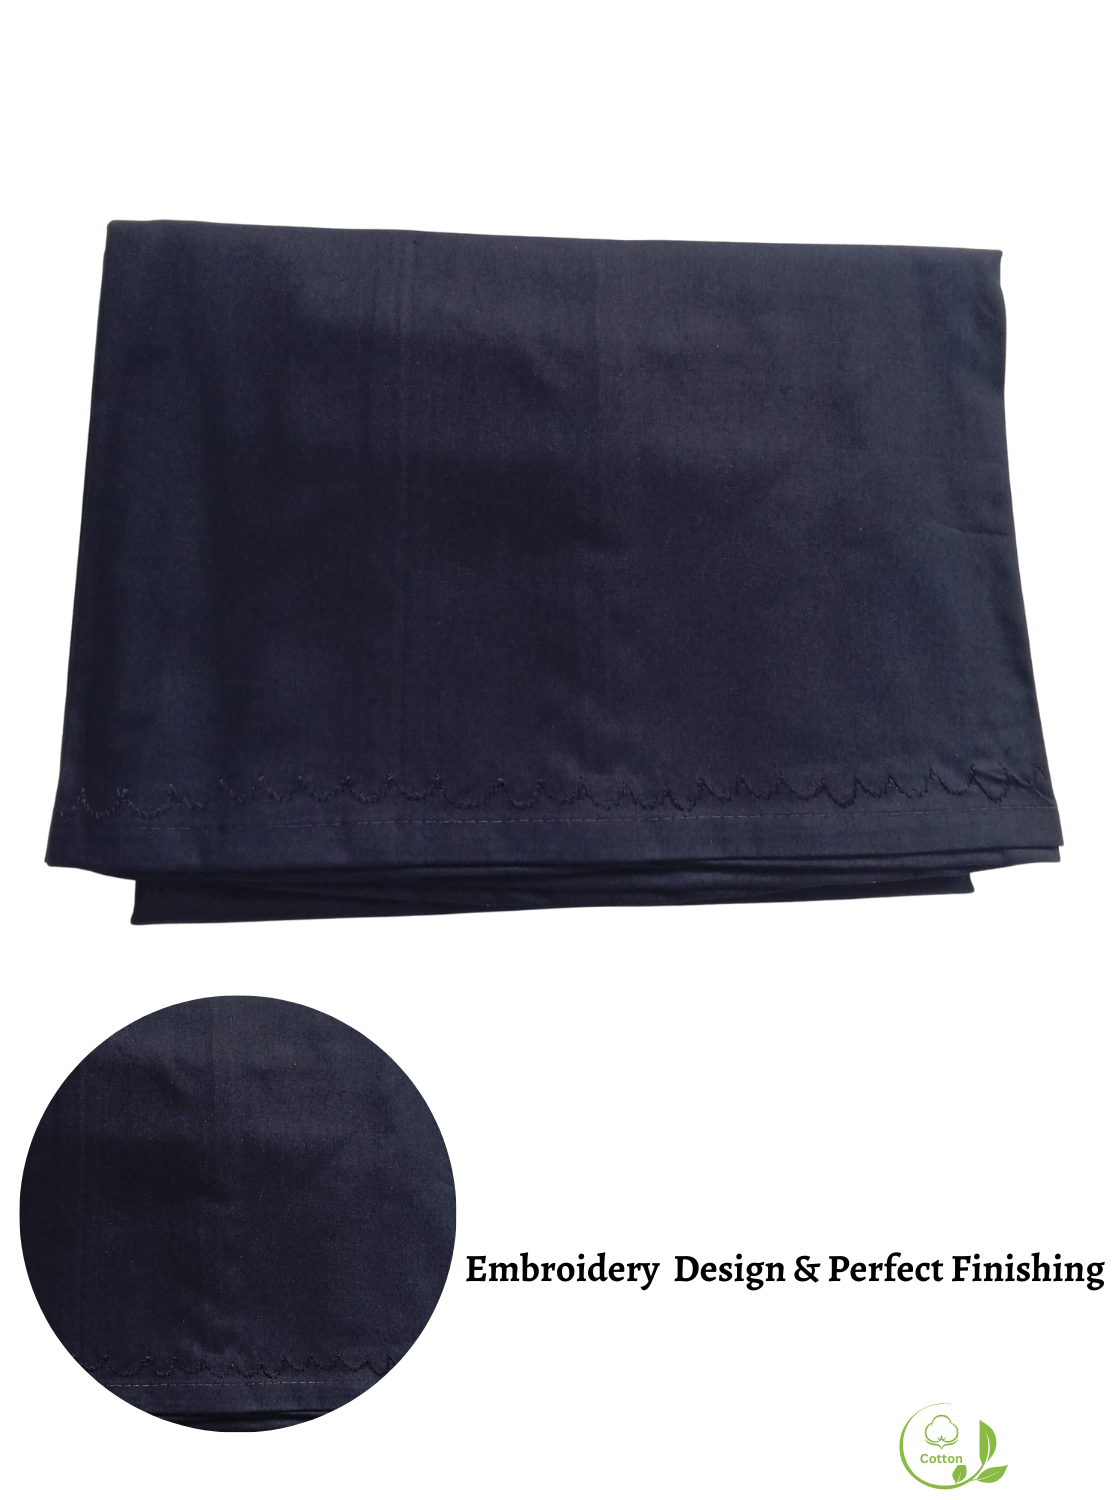 New MANGAI Premium Embroidery Superior Cotton Petticoats - 7 Part Multiple Color's